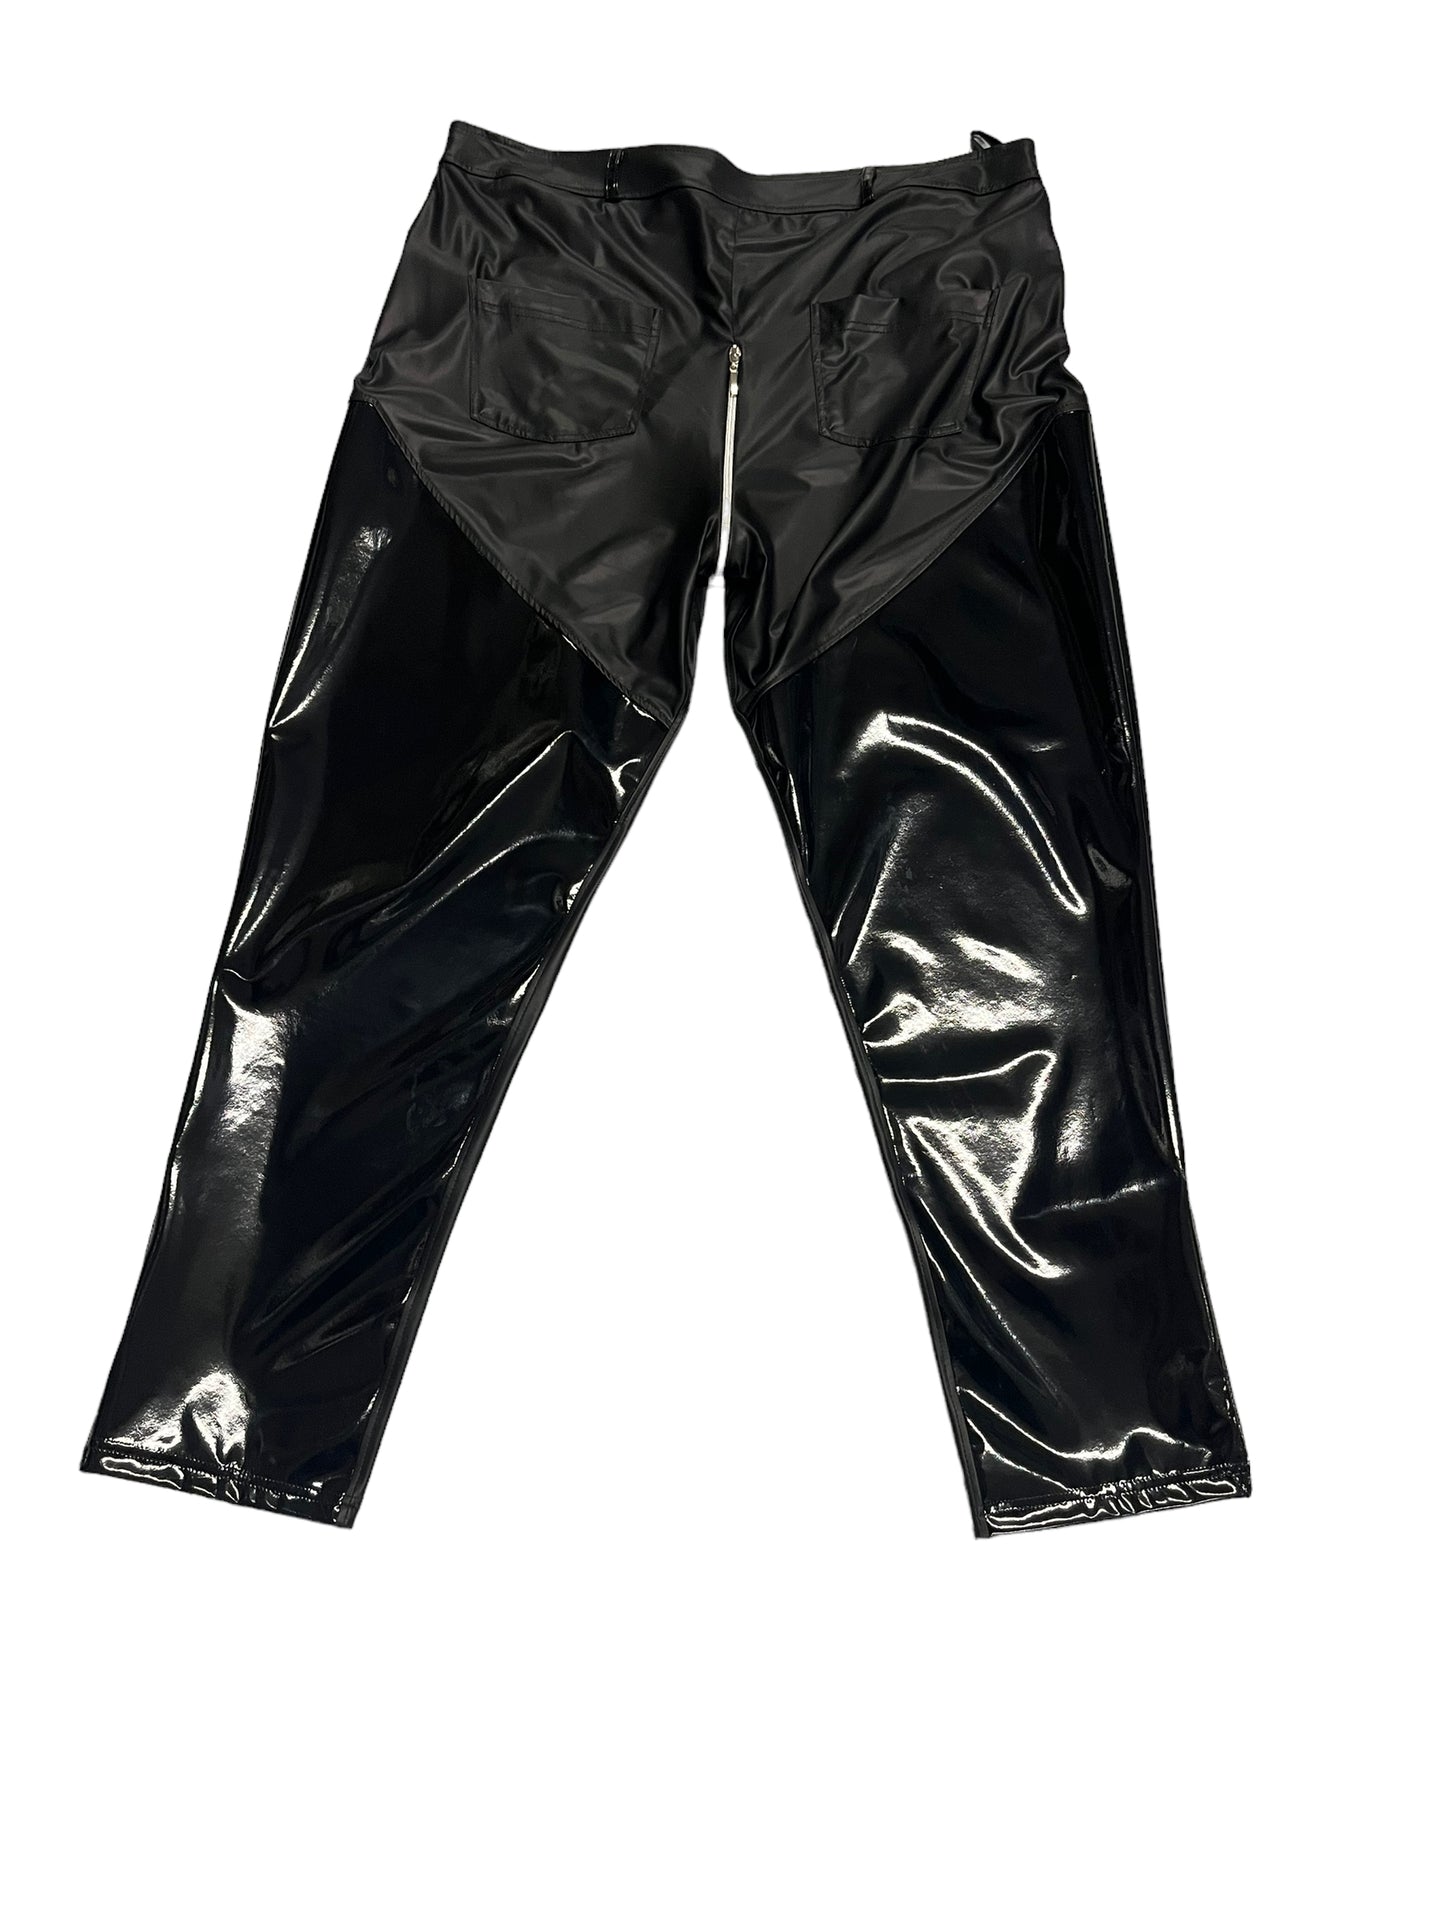 Noir - LL110 - Black Long Pants With Zipper - Size 5XL